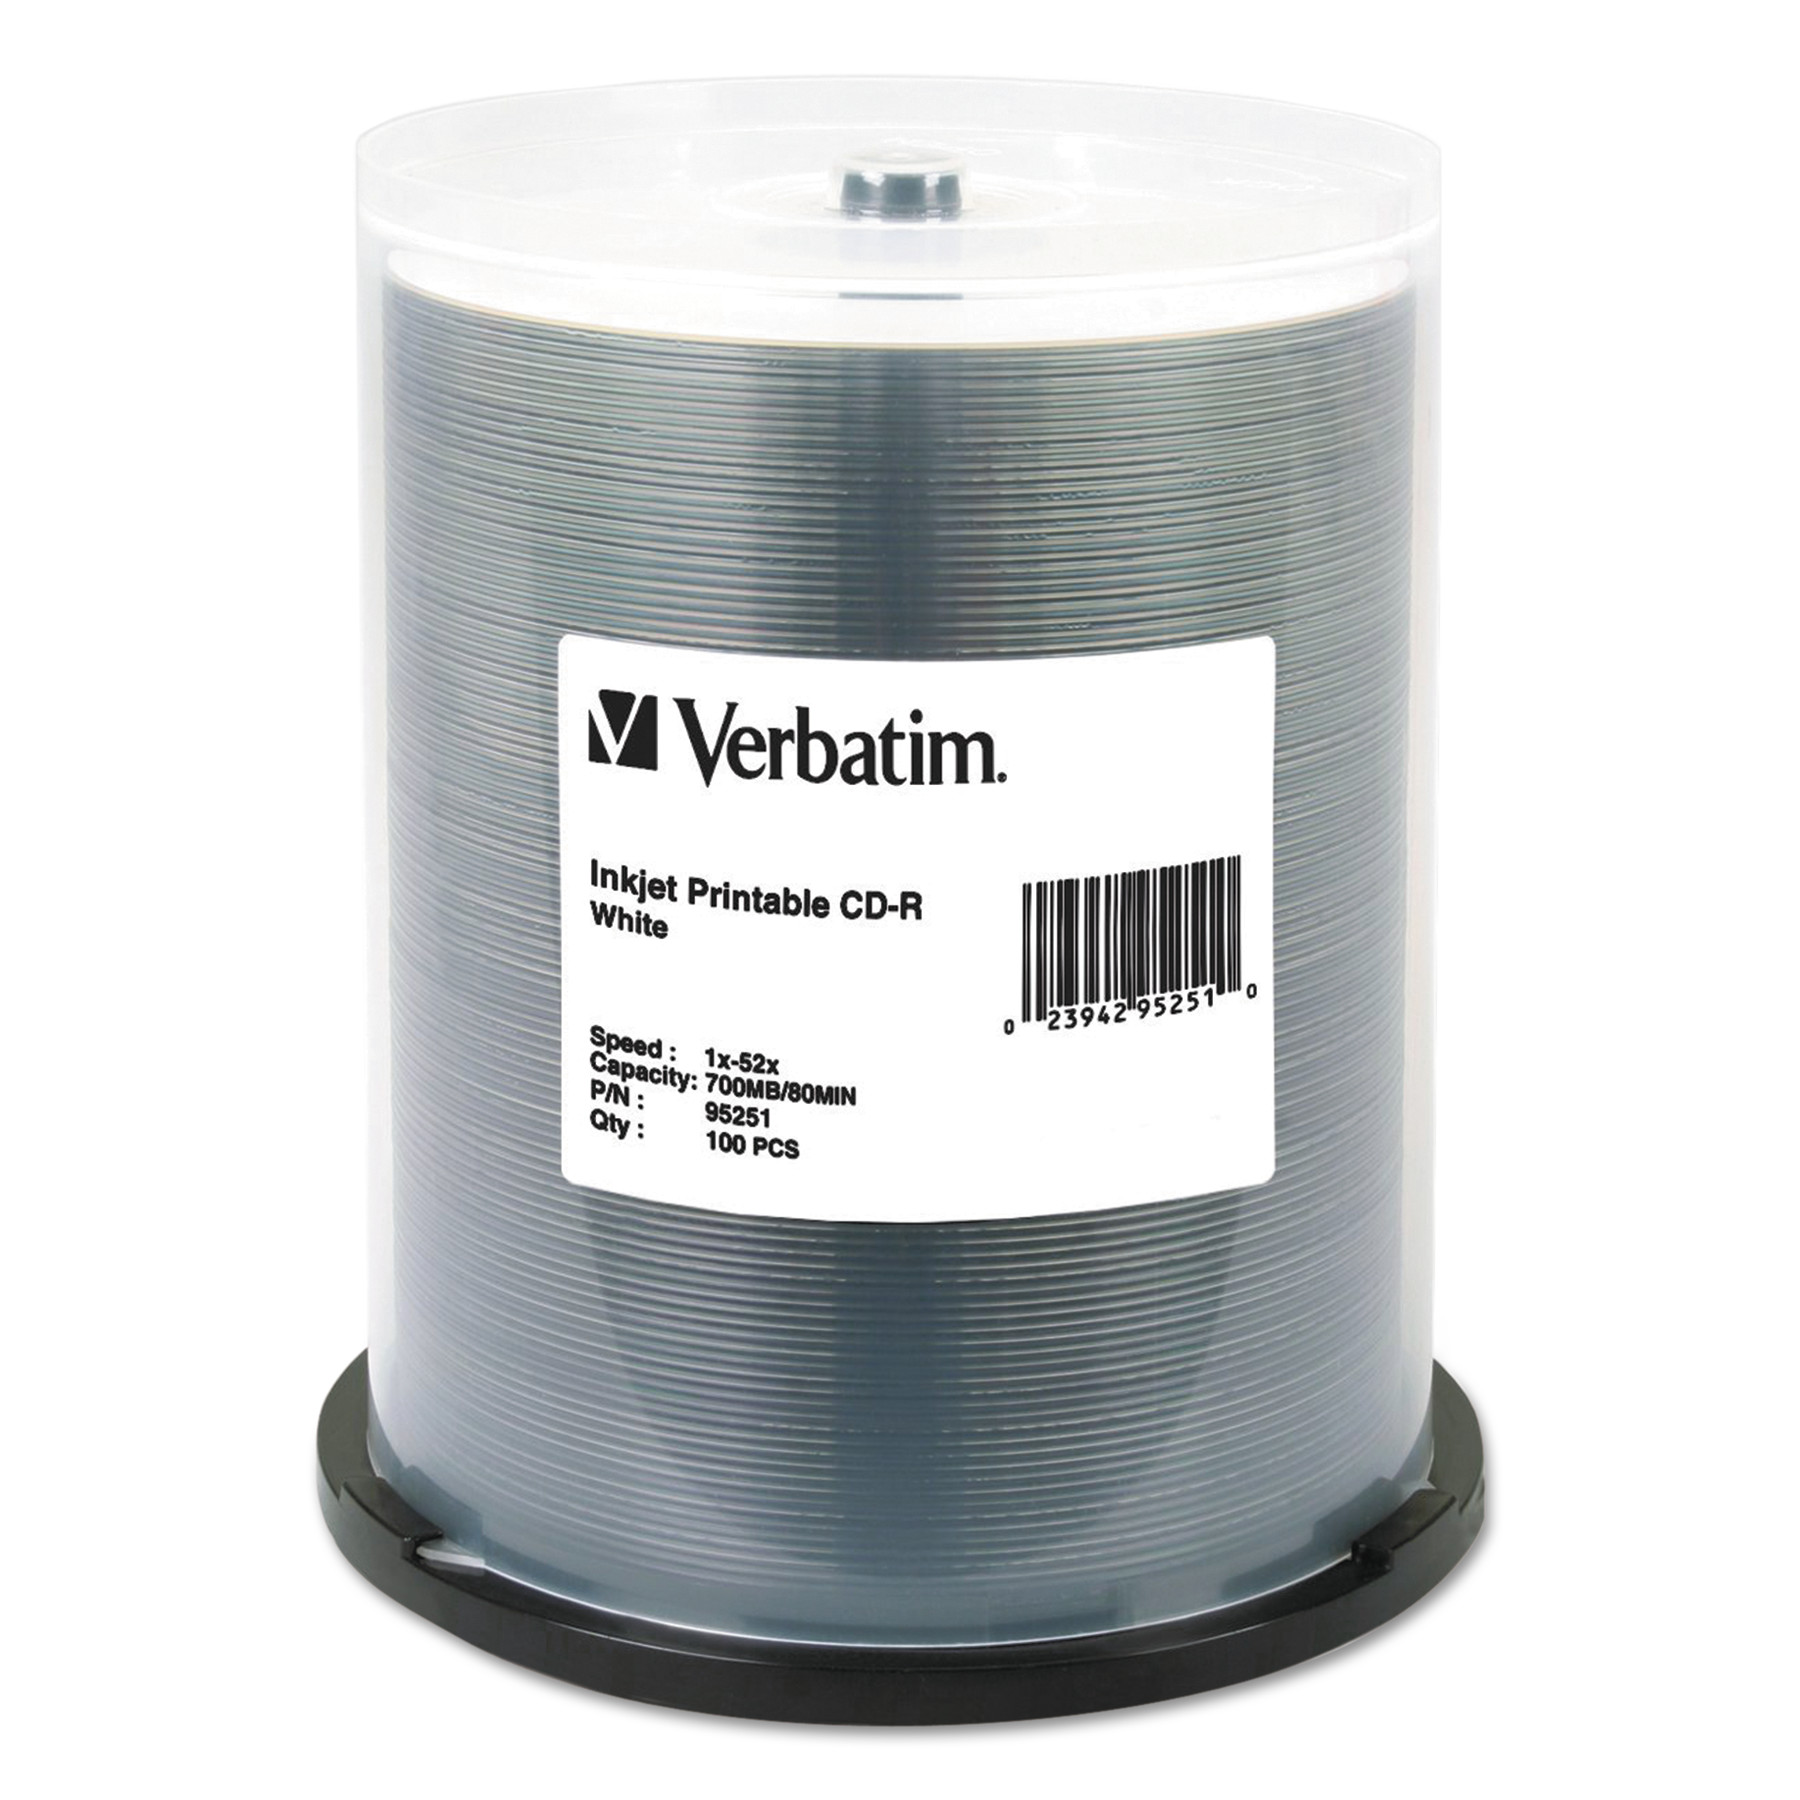 Verbatim CD-R 700MB 52X White Inkjet Printable - 100pk Spindle - image 1 of 2